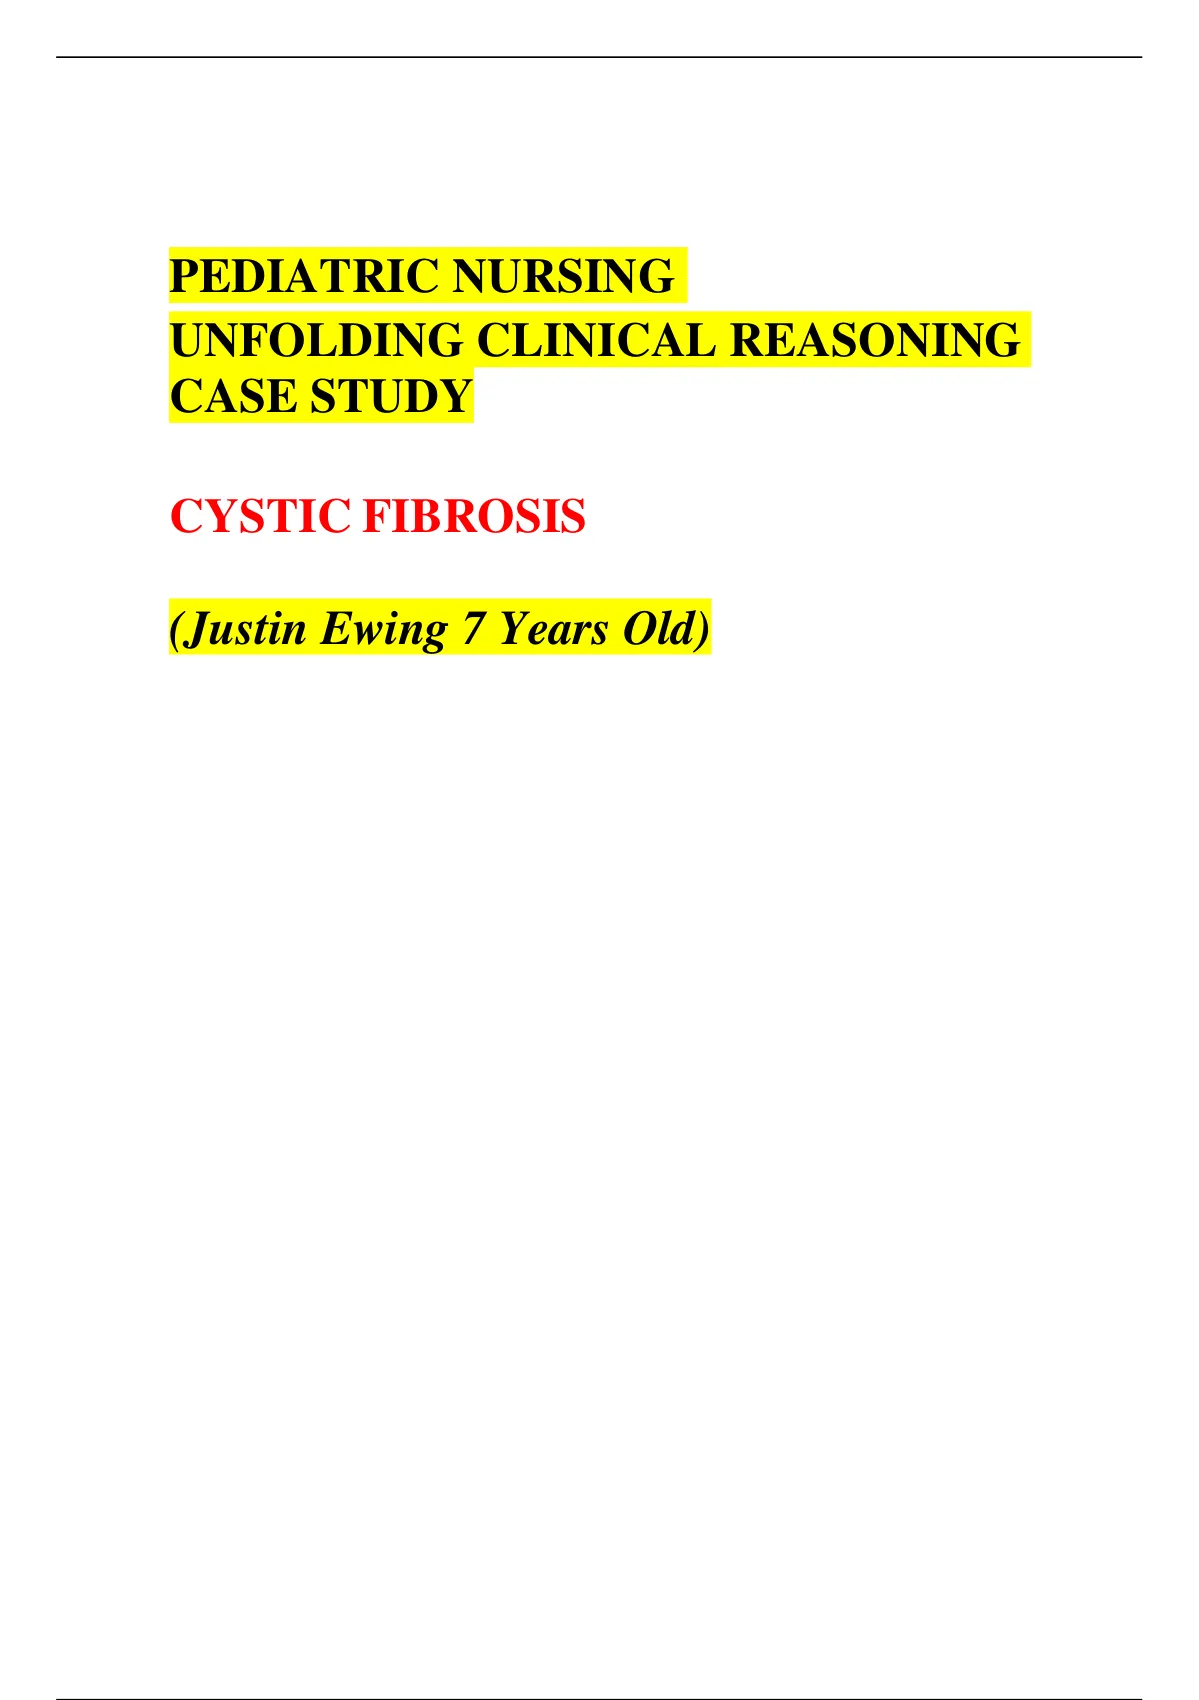 justin ewing cystic fibrosis case study